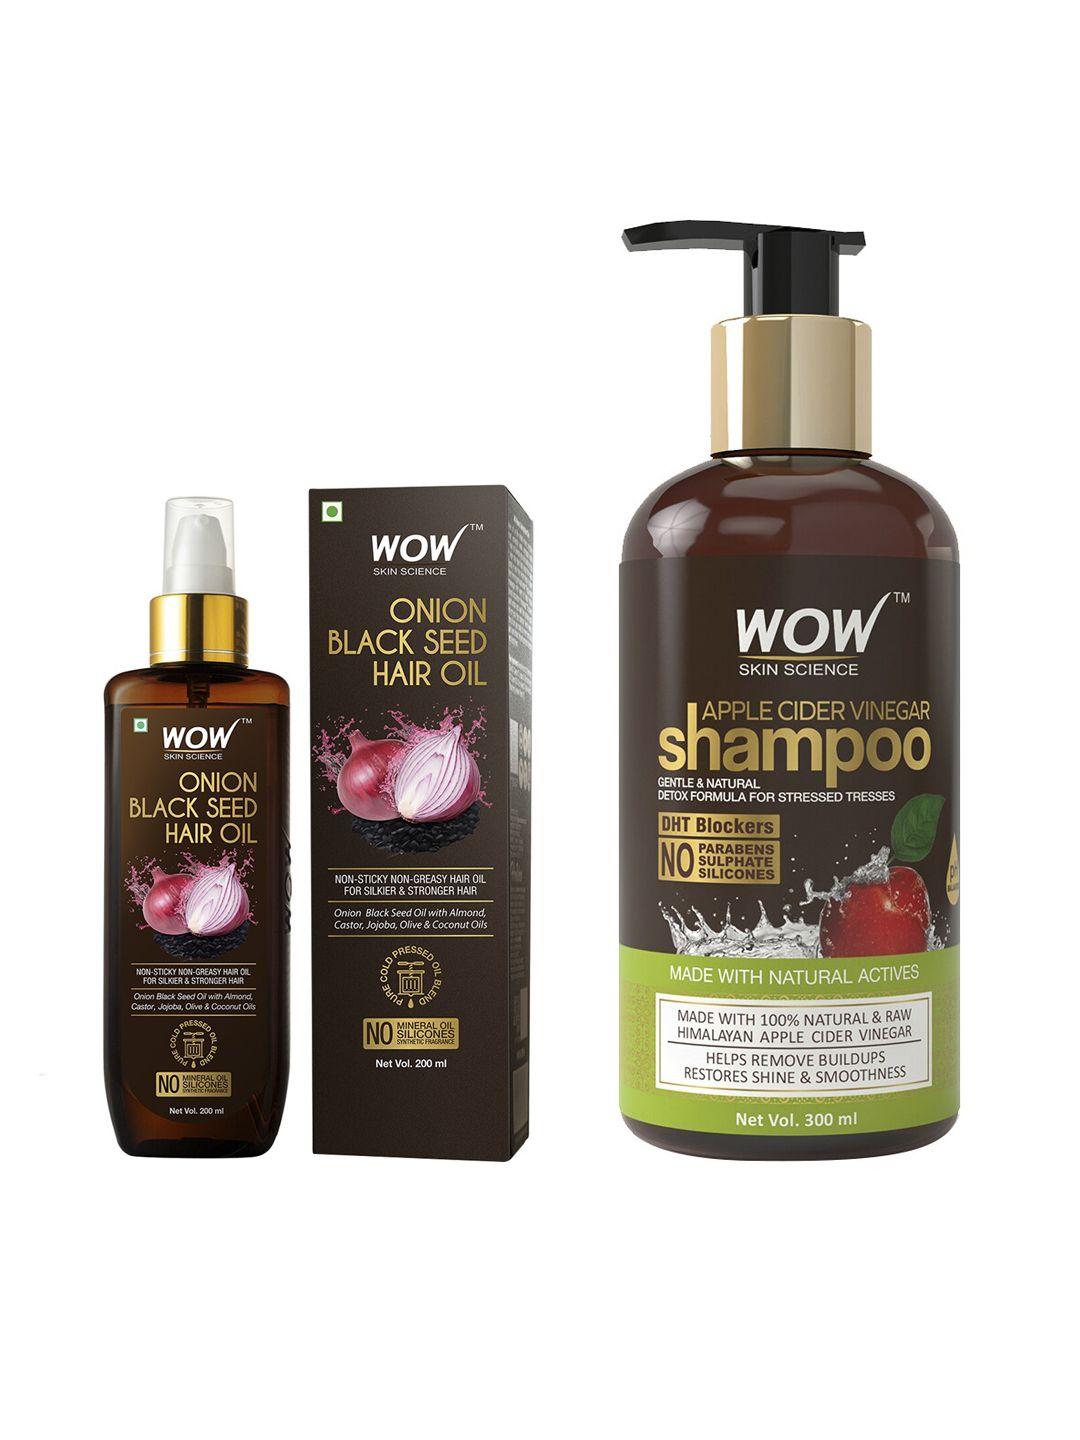 wow-skin-science-set-of-onion-black-seed-hair-oil-&-apple-cider-vinegar-shampoo